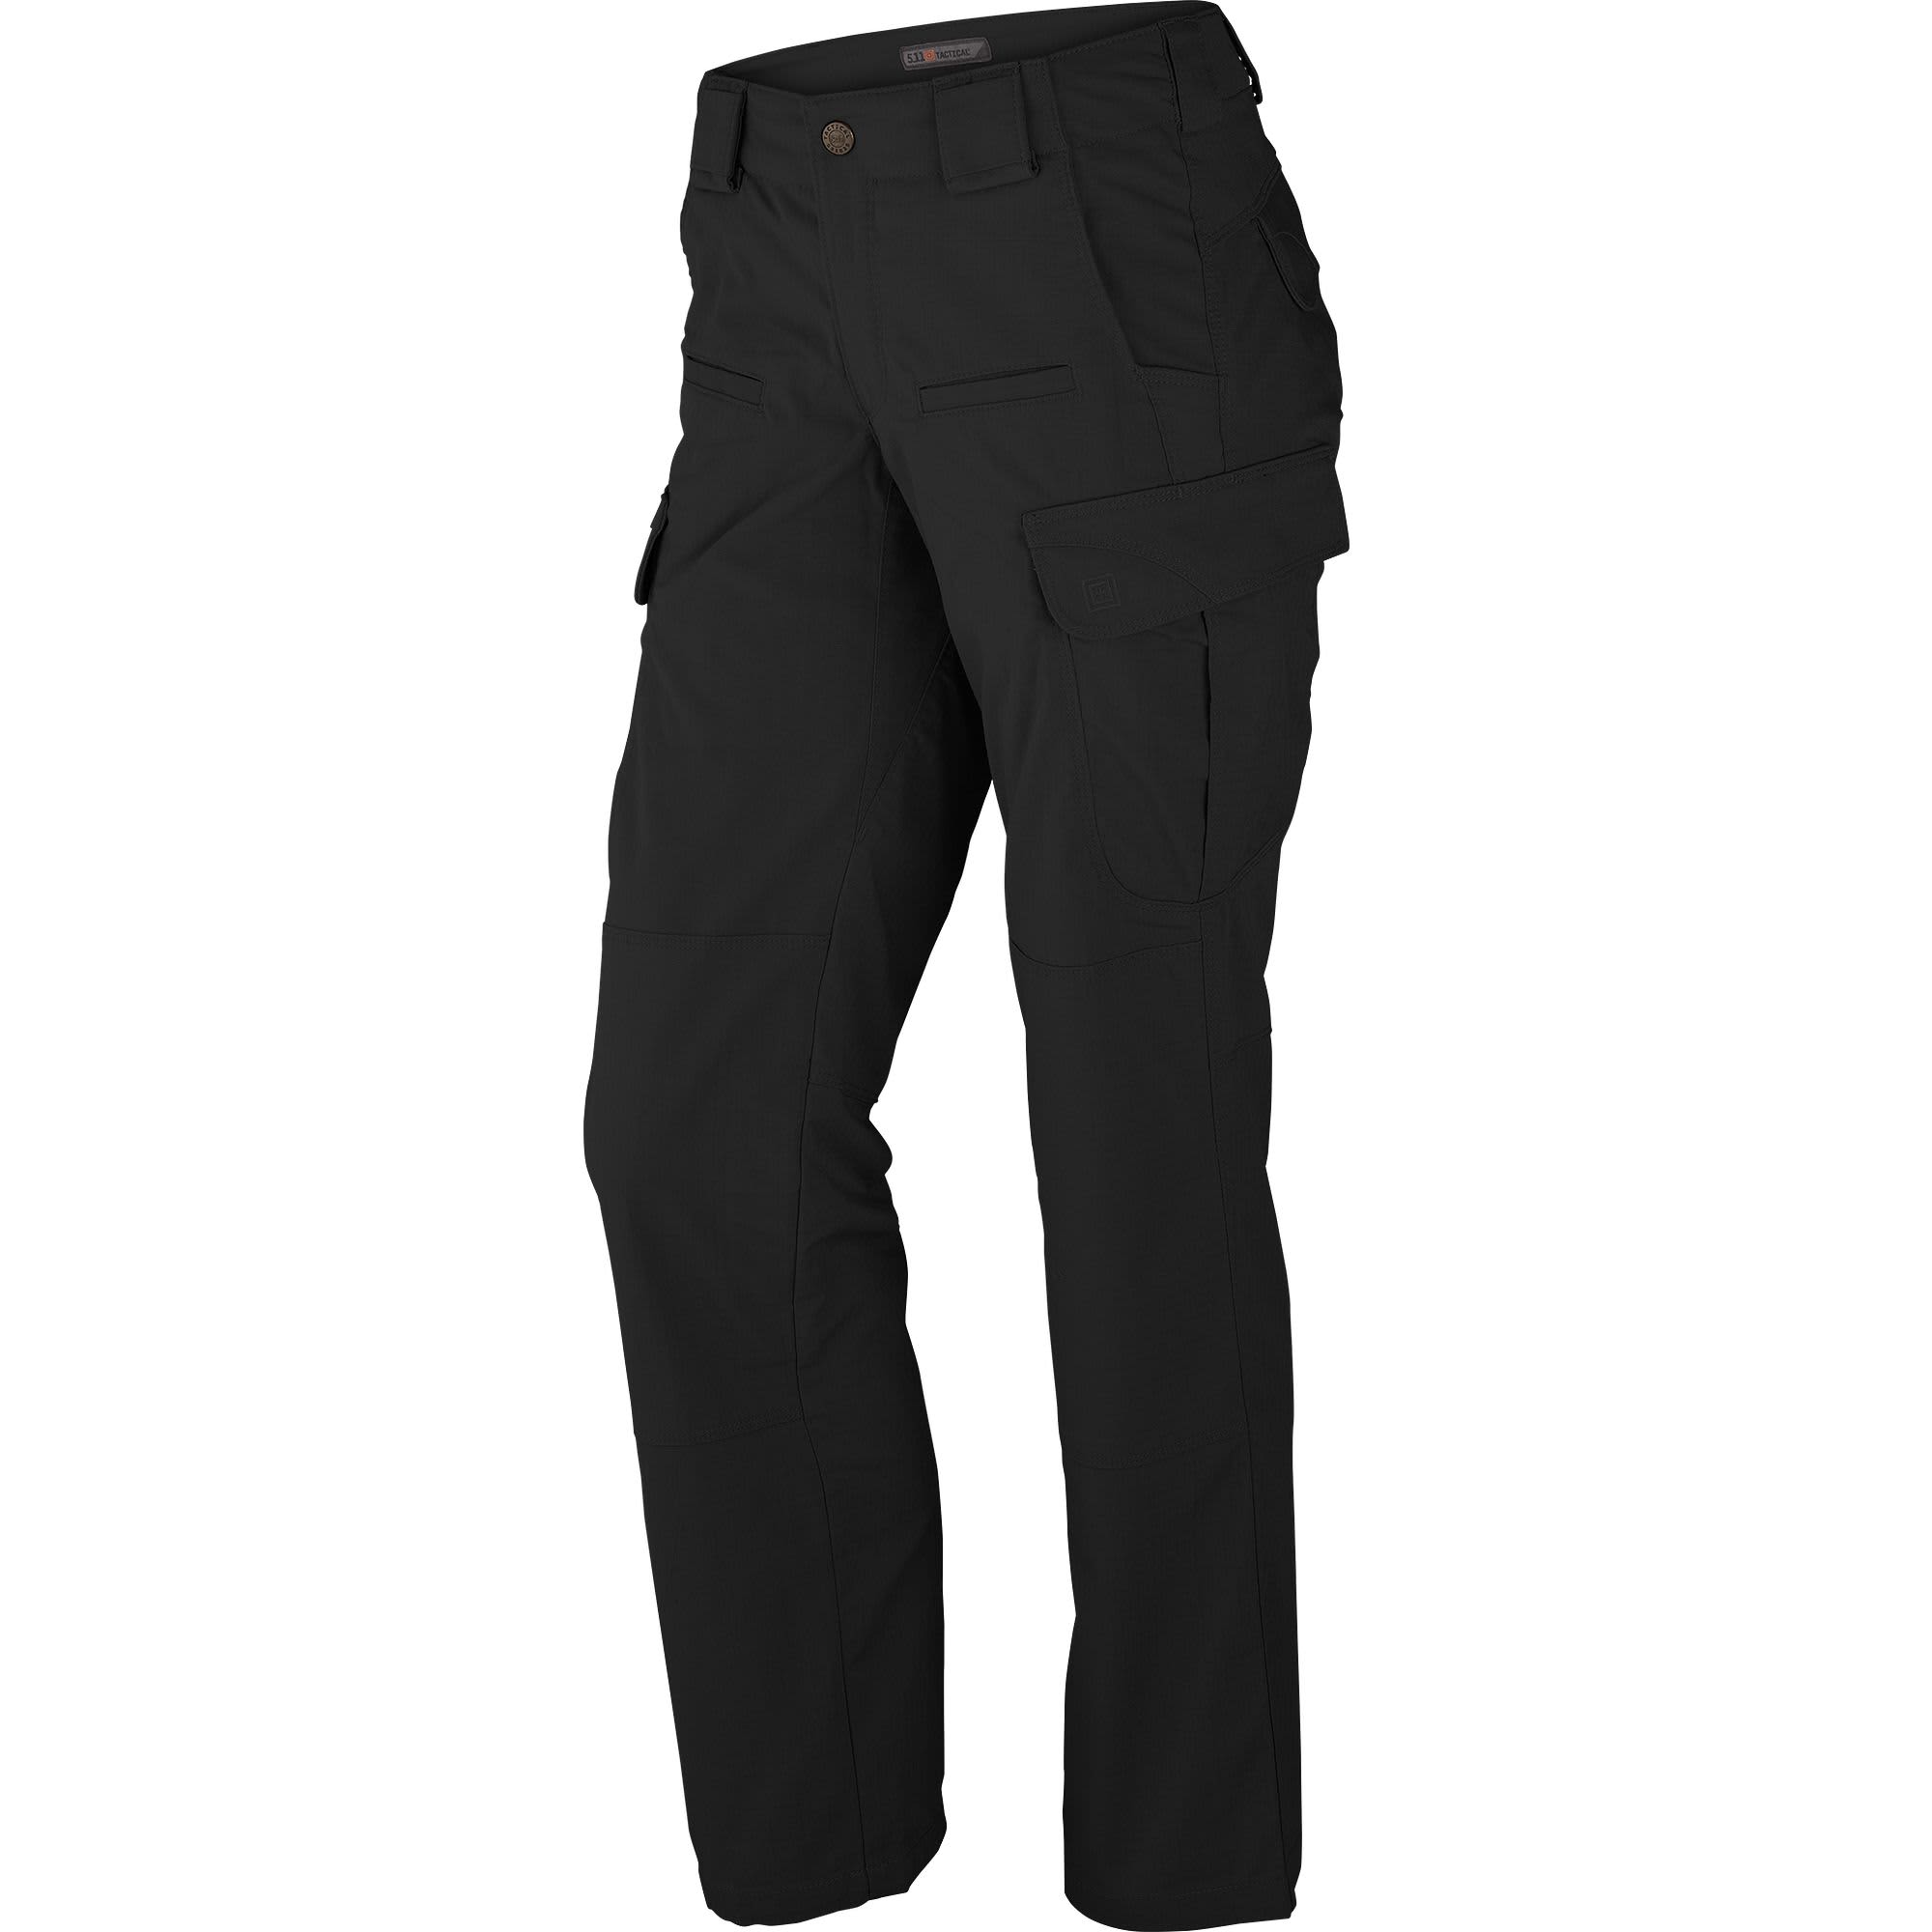 Carhartt Women's Original Fit Fleece Lined Crawford Pant / Black